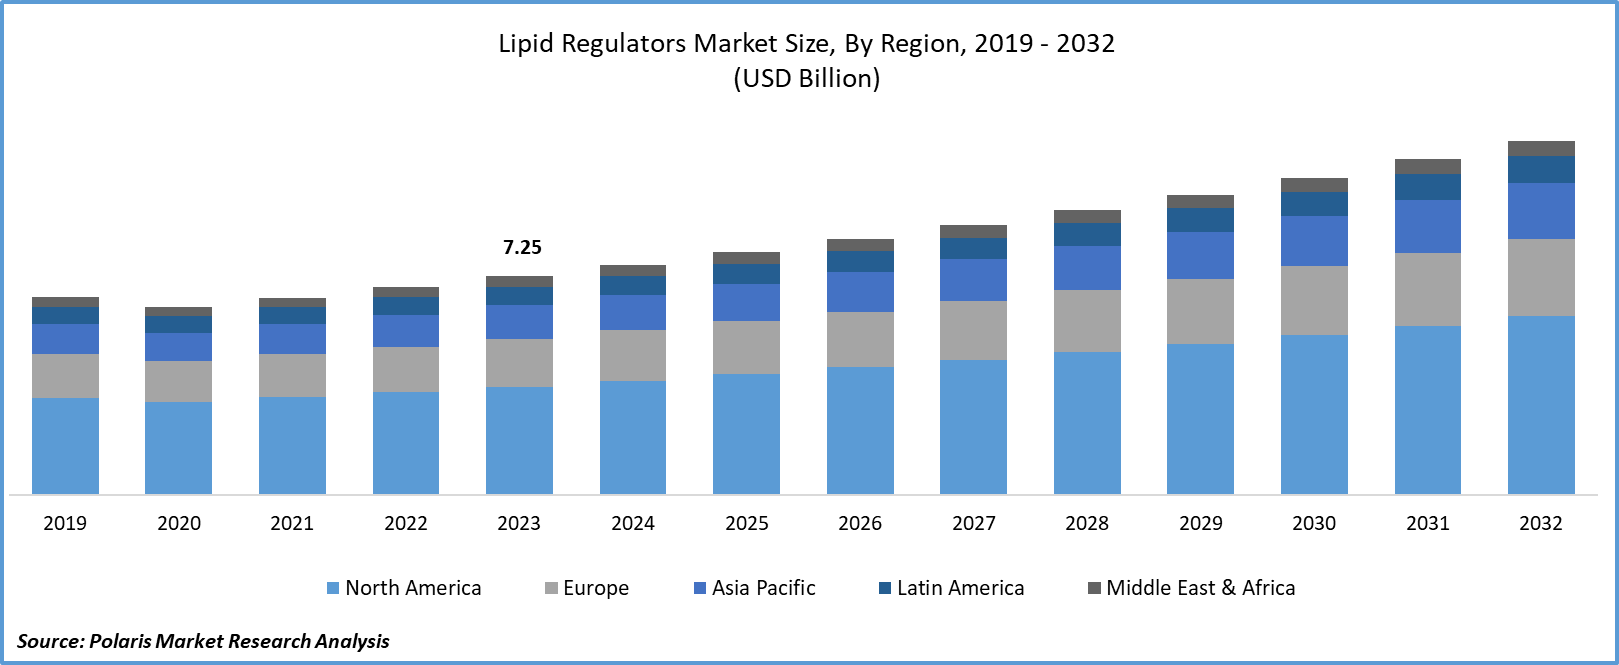 Lipid Regulators Market Size